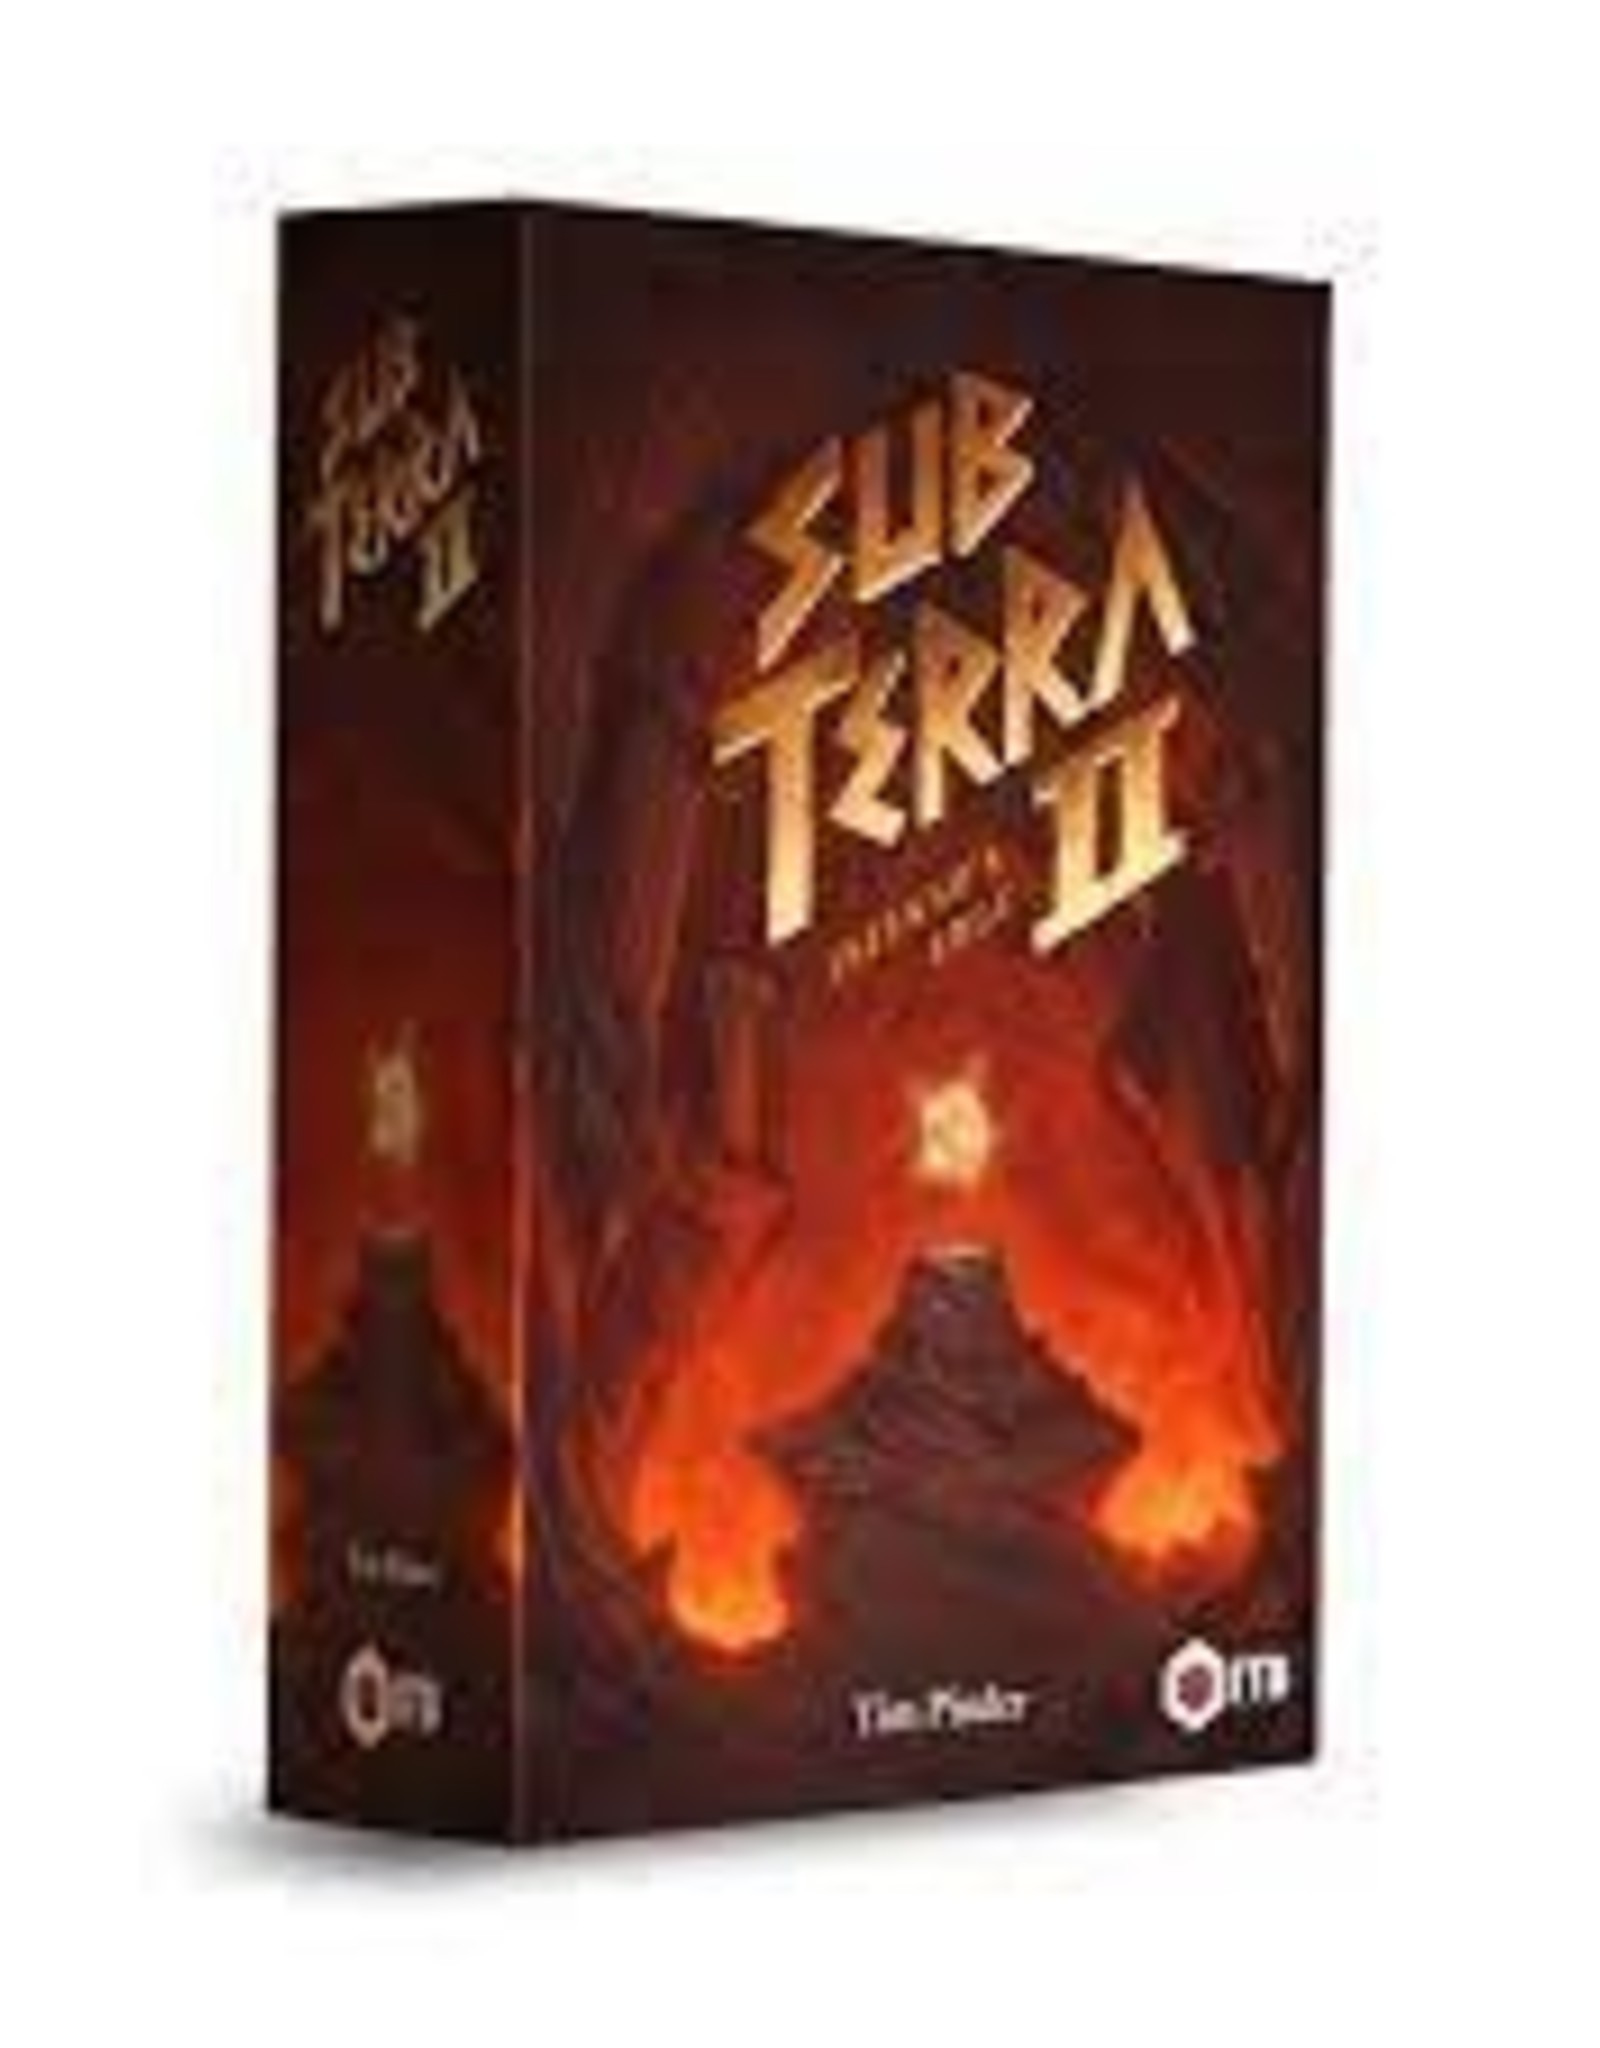 Inside the Box Games Sub Terra 2 - Inferno's Edge